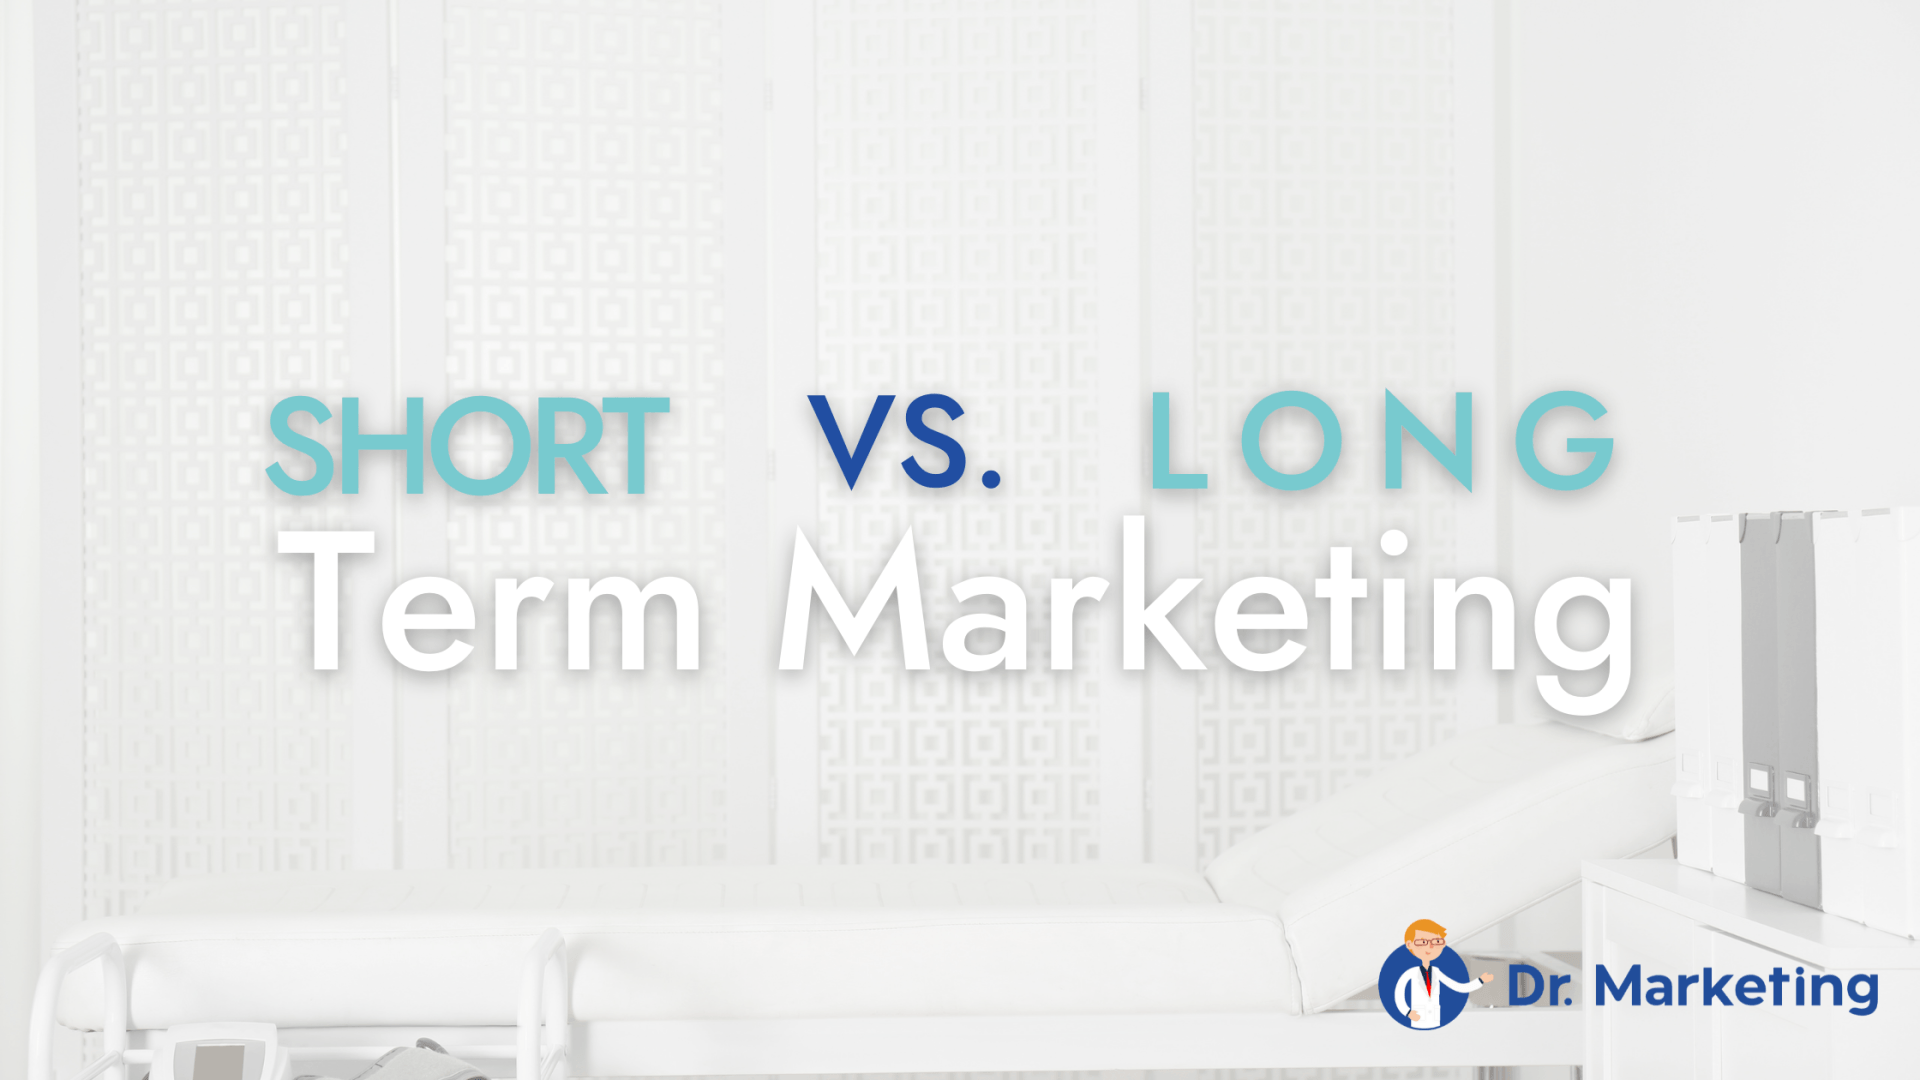 Short Term Marketing | Long Term Marketing | Short vs Long | Marketing | PPC | Social Media | Ads | Content Marketing